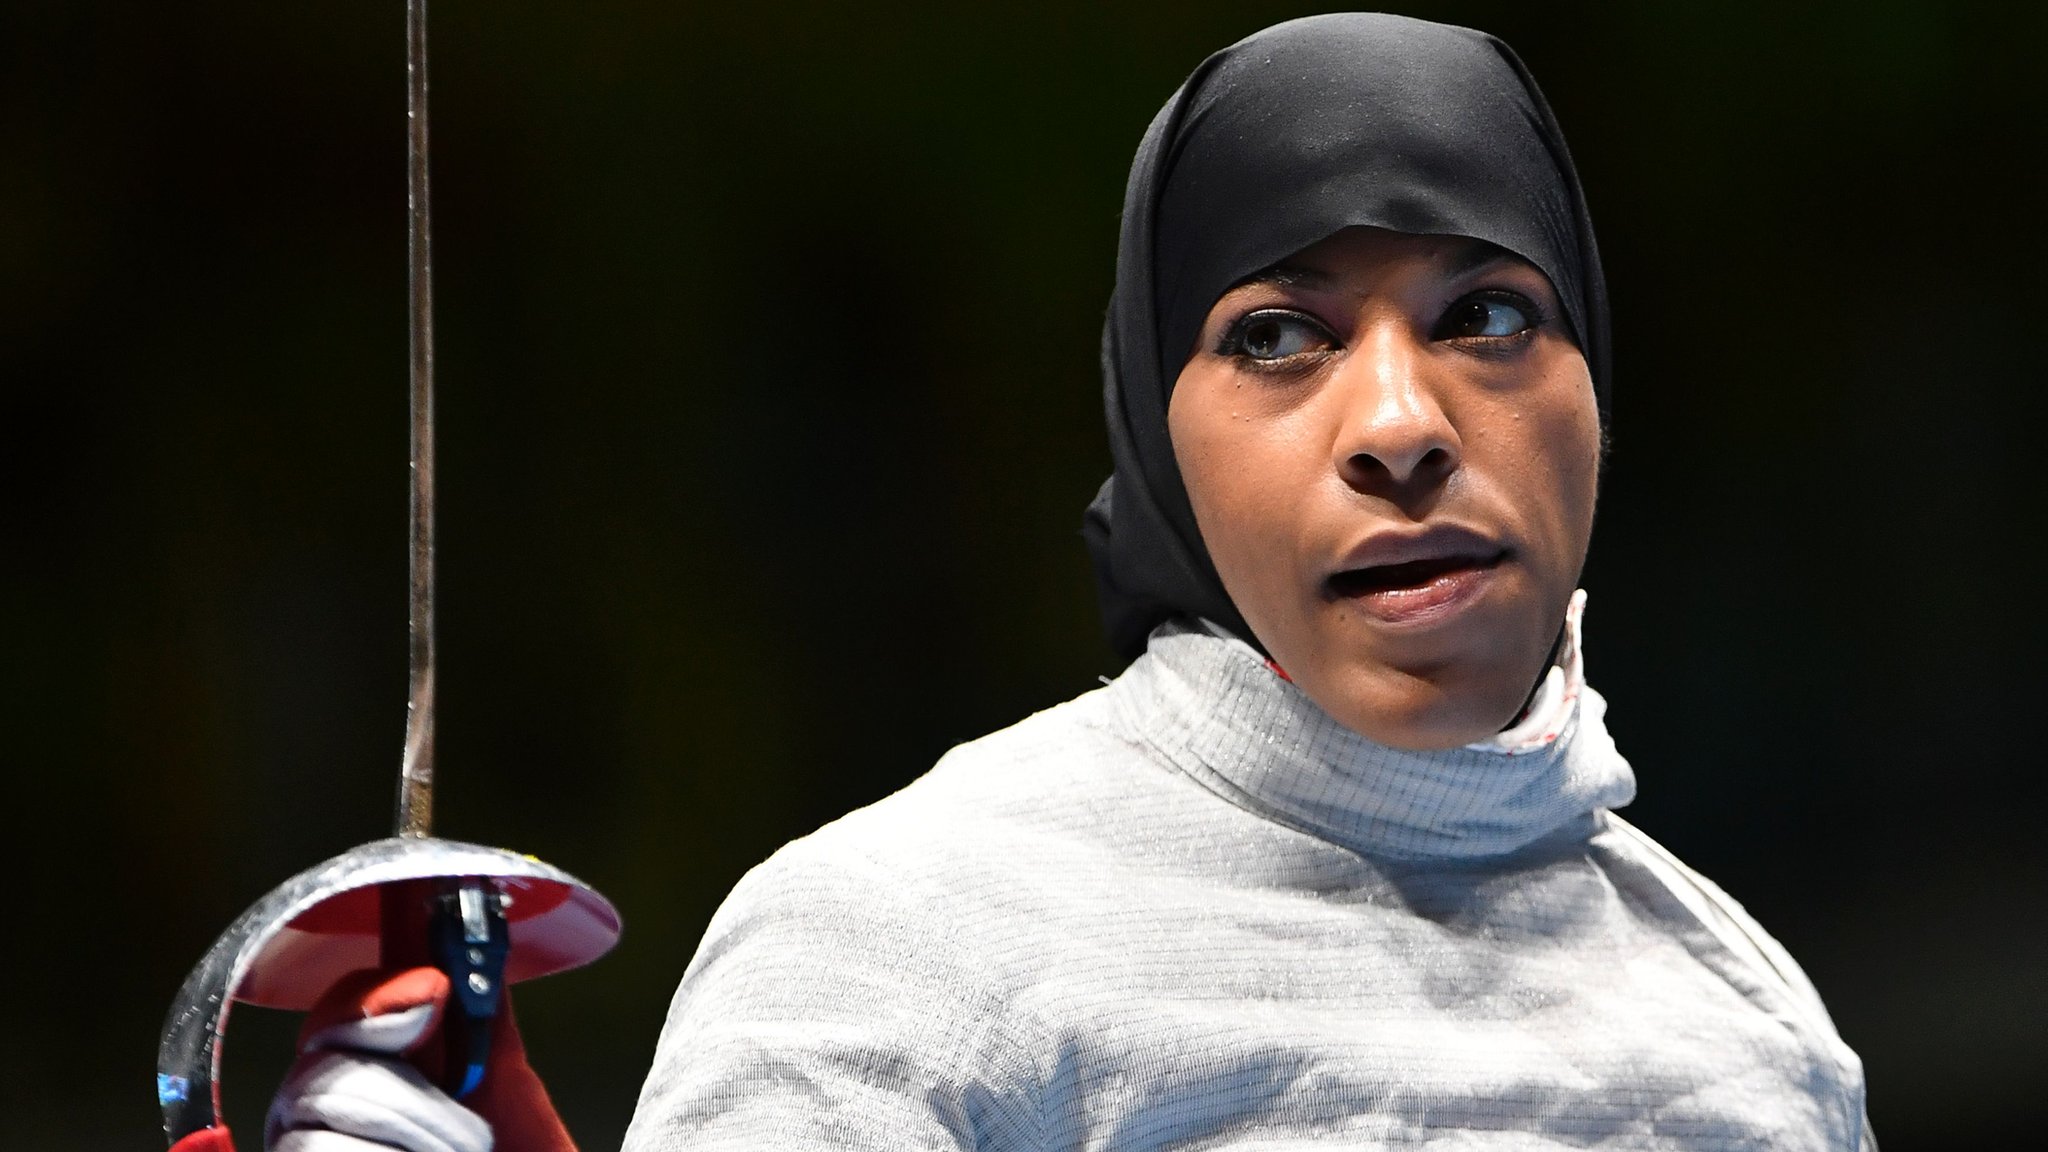 Hijabs allowed in athletes village at Paris 2024 - IOC